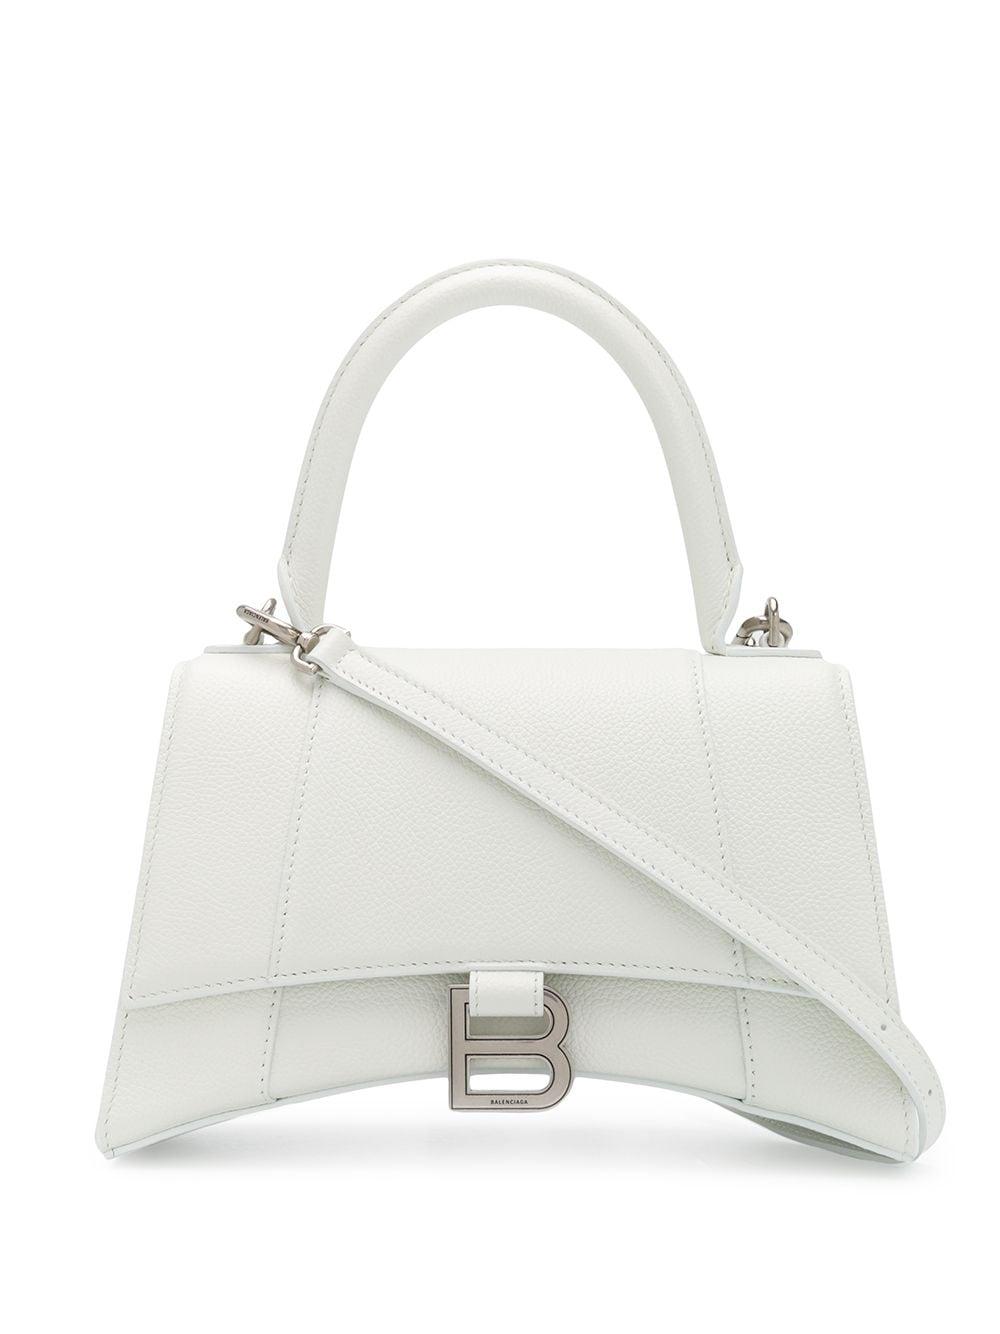 Balenciaga Hourglass S Tote Bag in White - Lyst